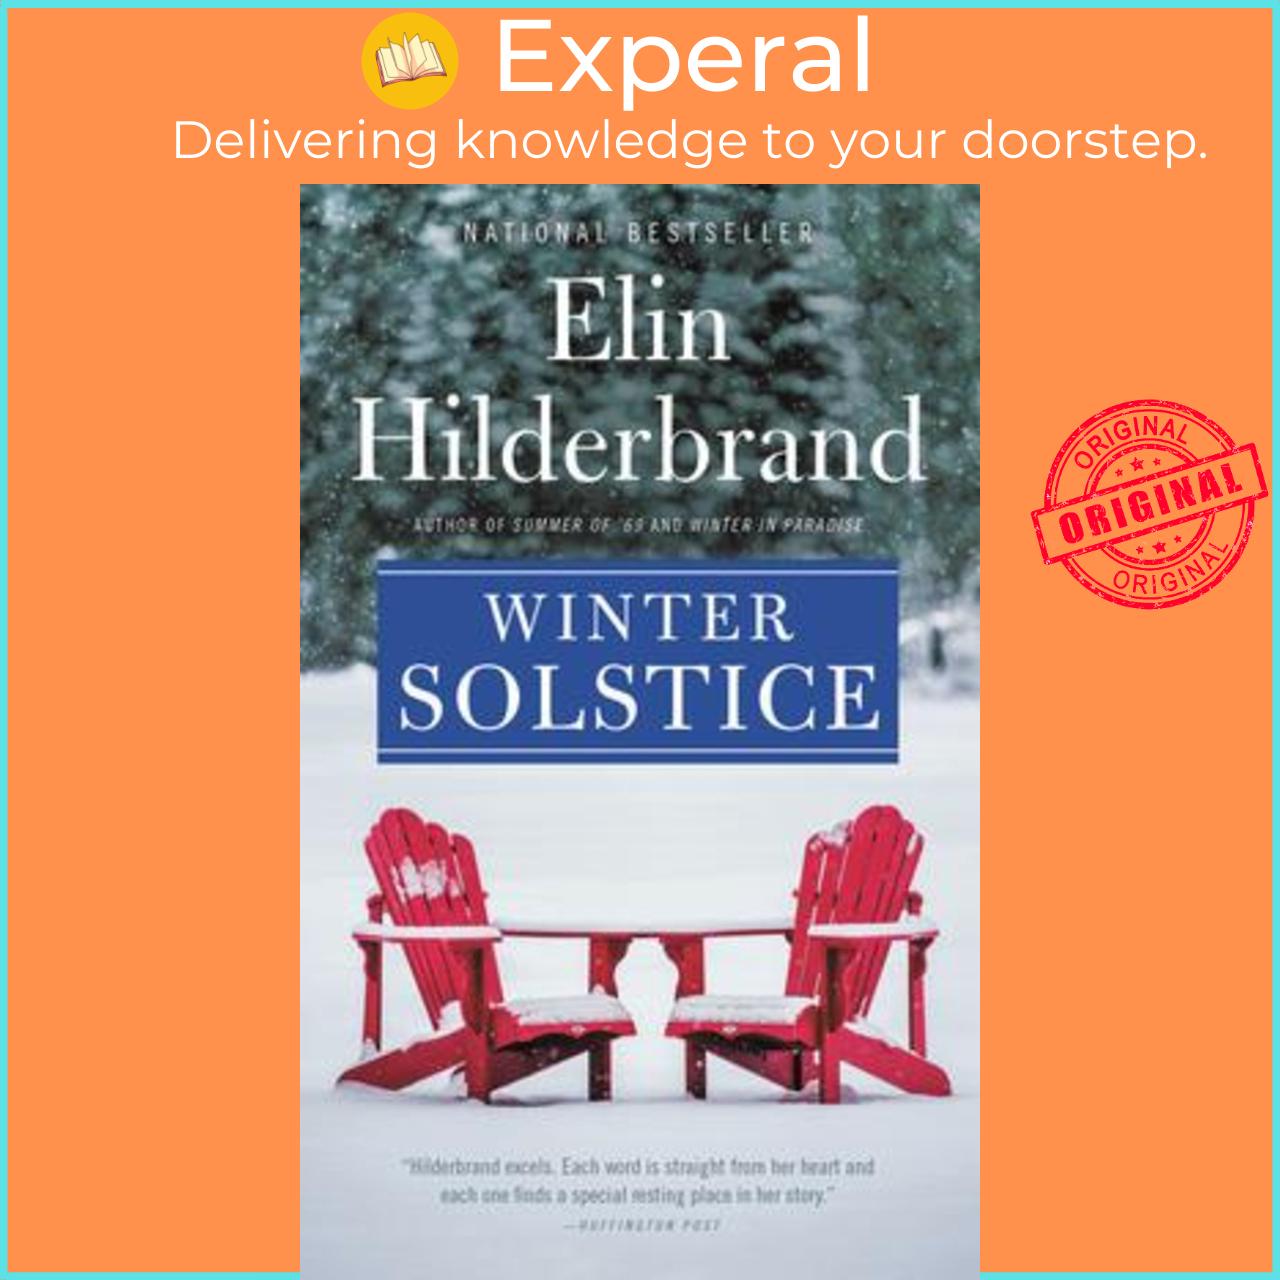 Sách - Winter Solstice by Elin Hilderbrand (US edition, paperback)